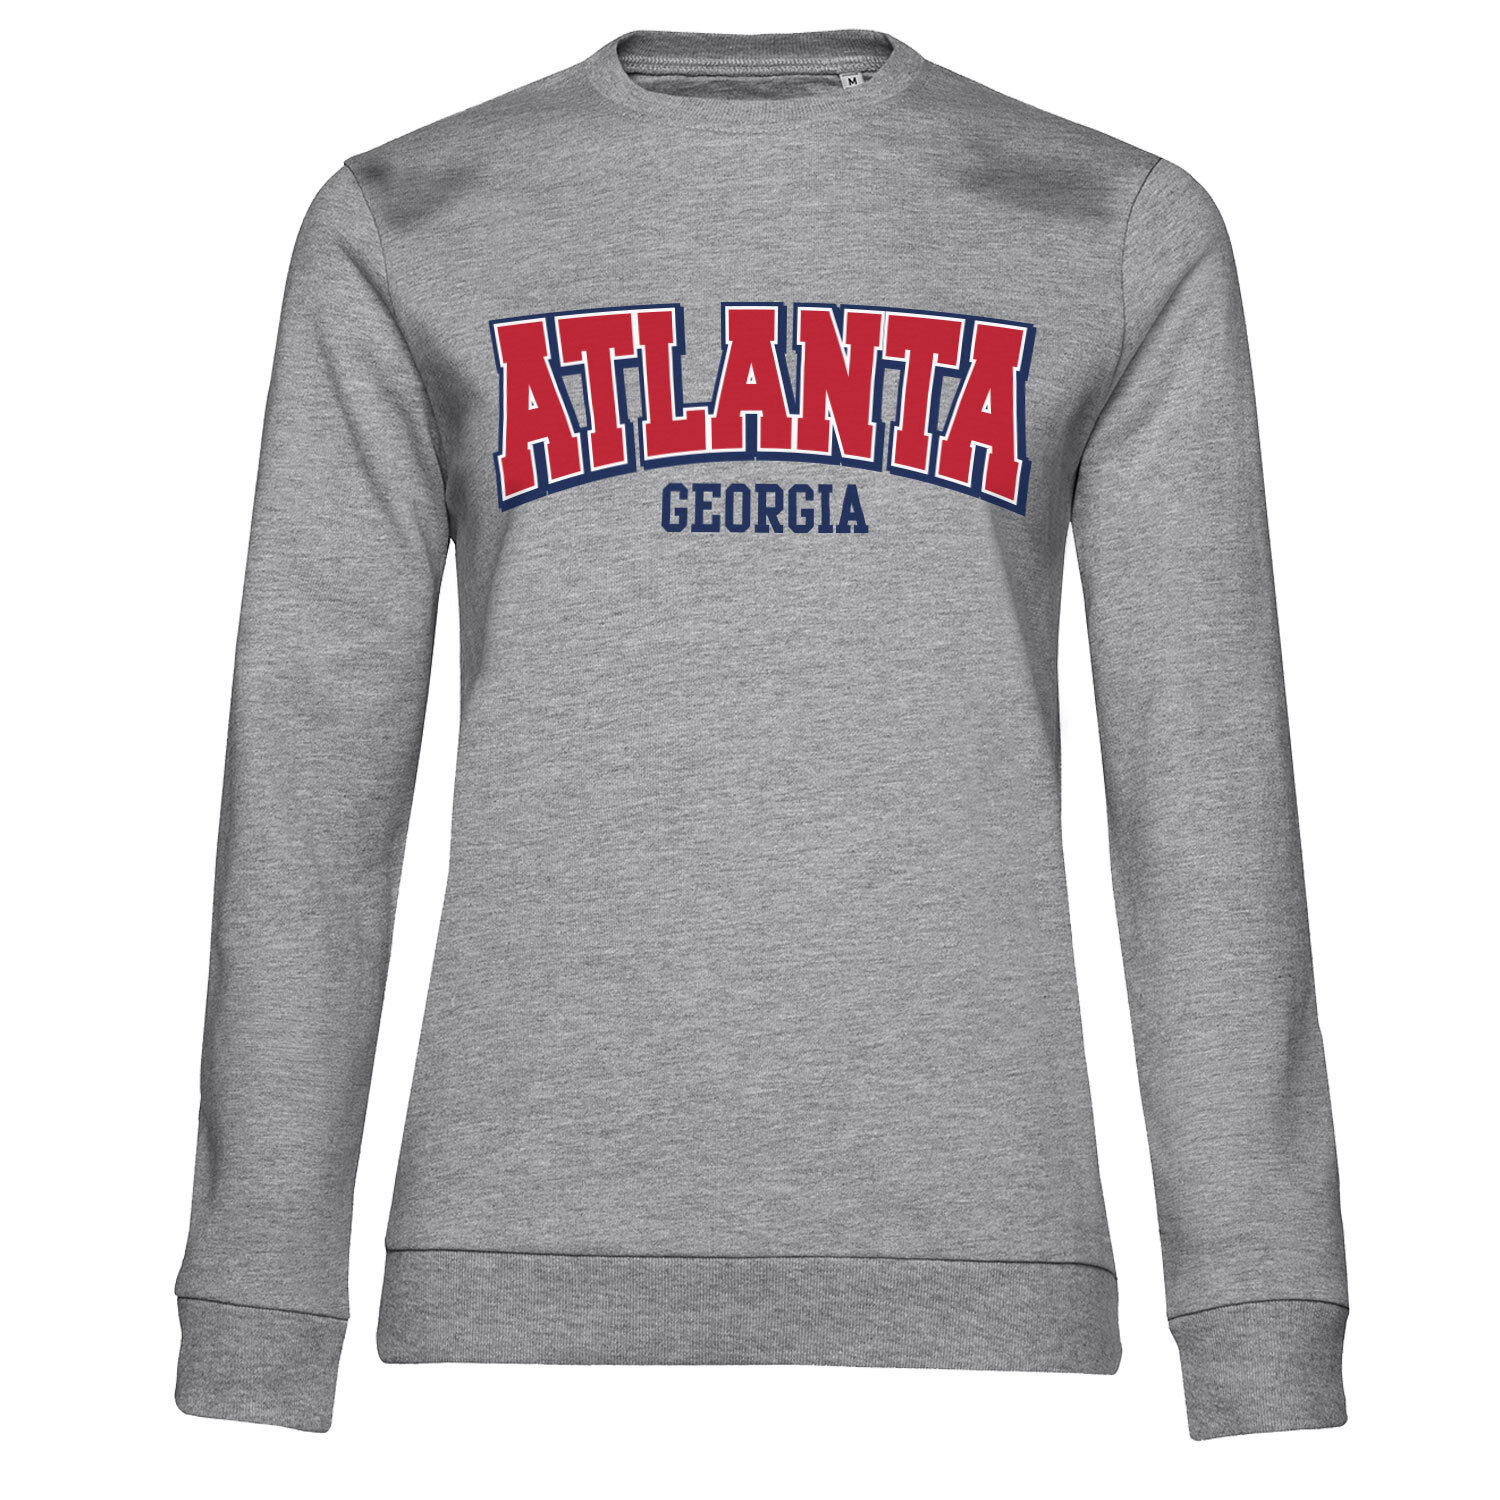 Atlanta - Georgia Girly Sweatshirt